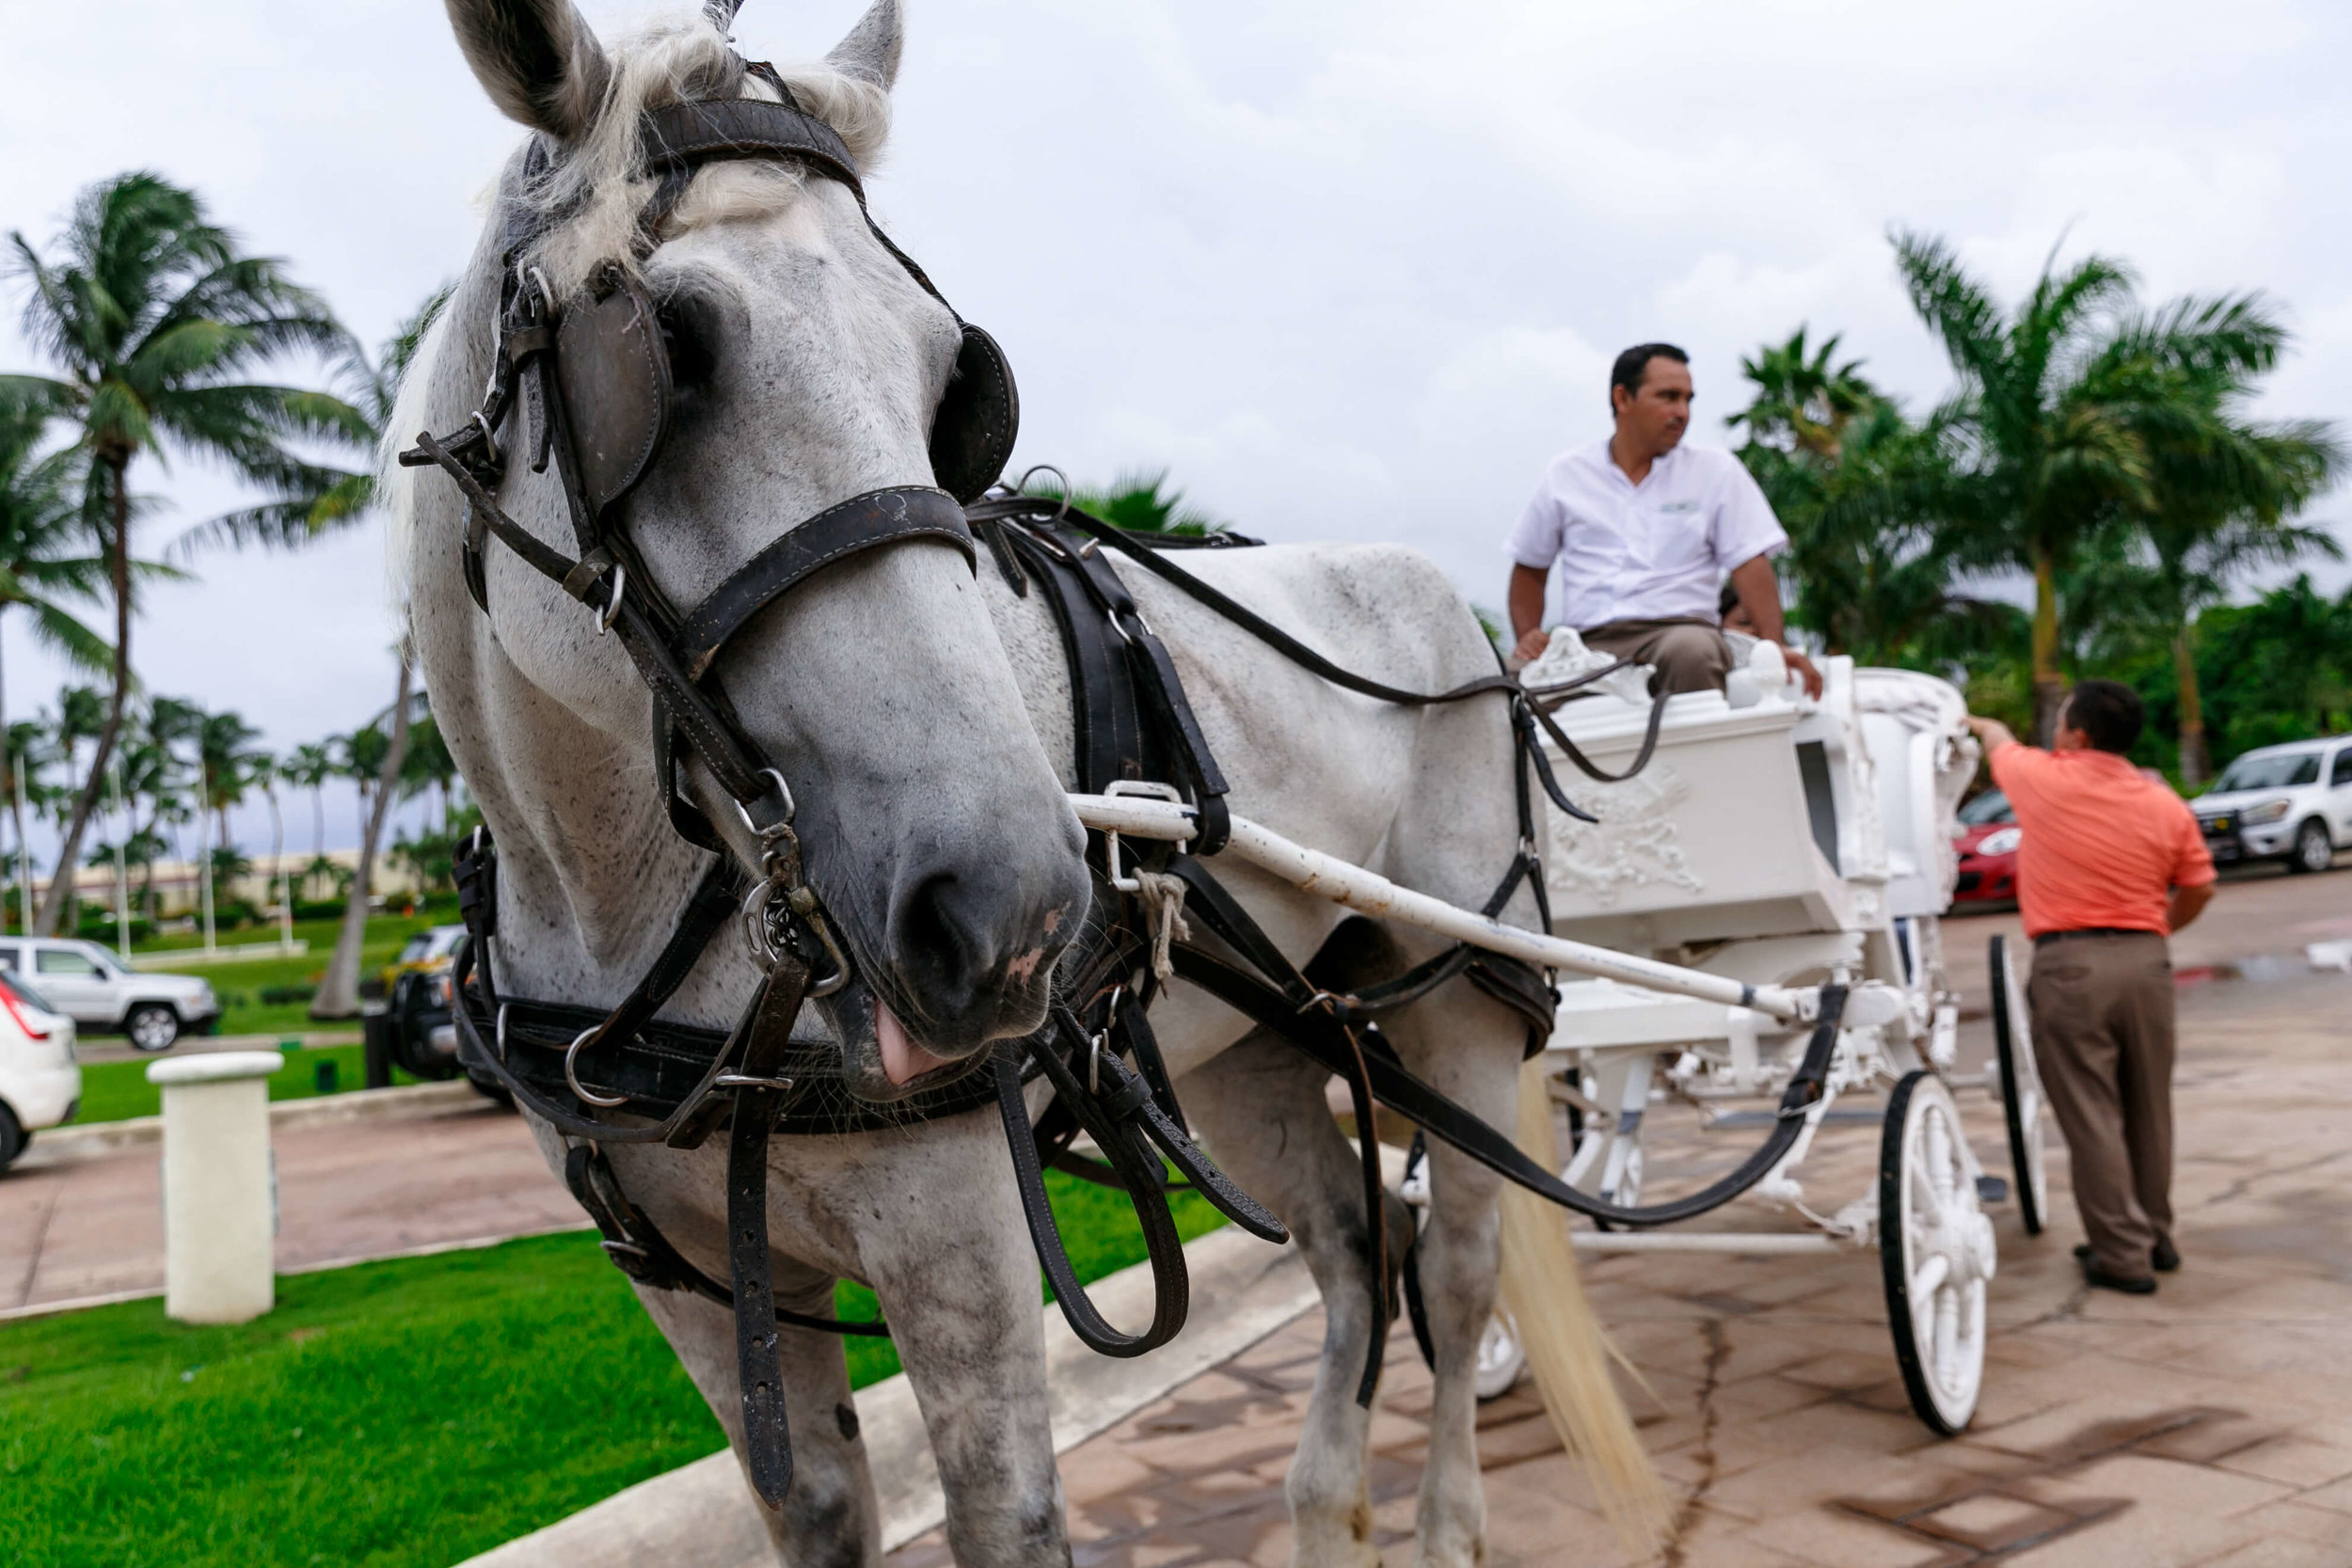 tressa-how-to-plan-a-destination-wedding-in-cancun-mexico-moon-palace-resort-black-destination-bride-destiland-desti-guide-to-destination-weddings-beach-wedding-carriage.jpg